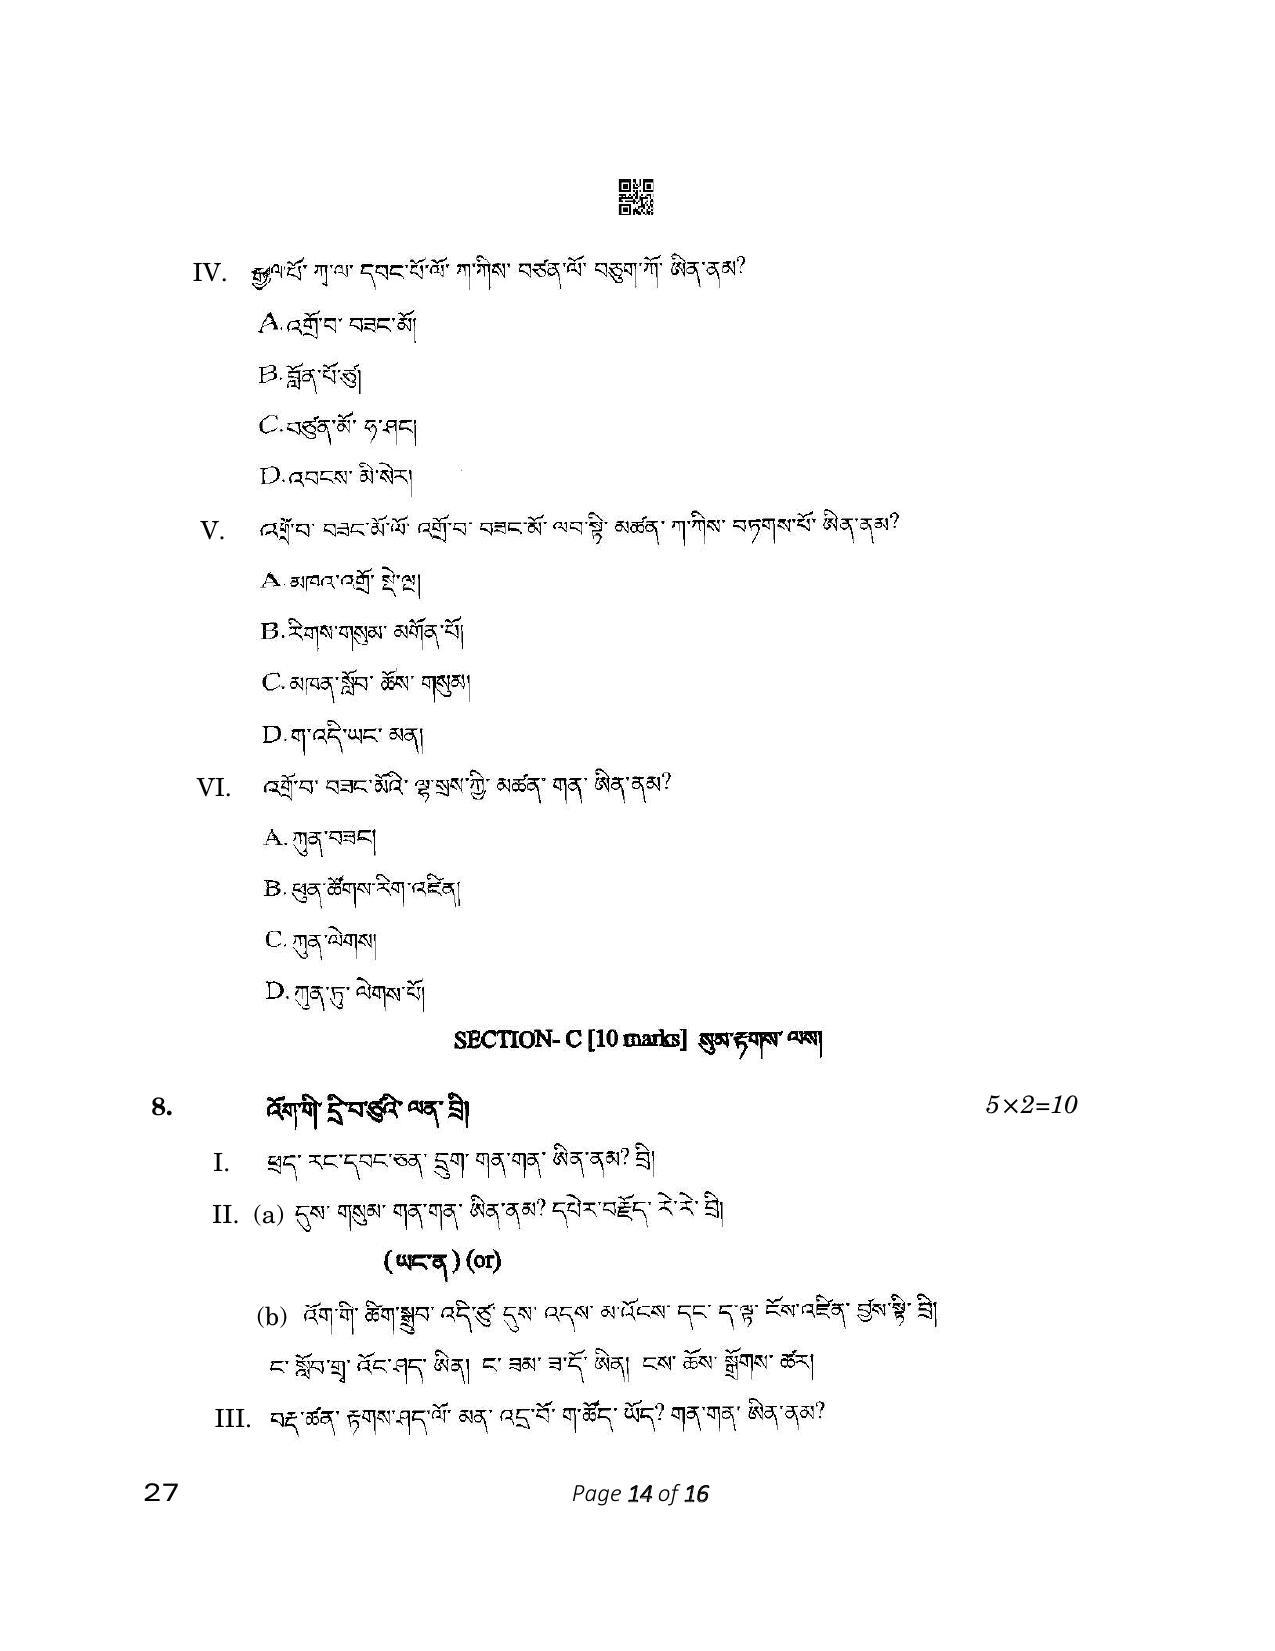 CBSE Class 12 27_Bhutia 2023 2023 Question Paper - Page 14